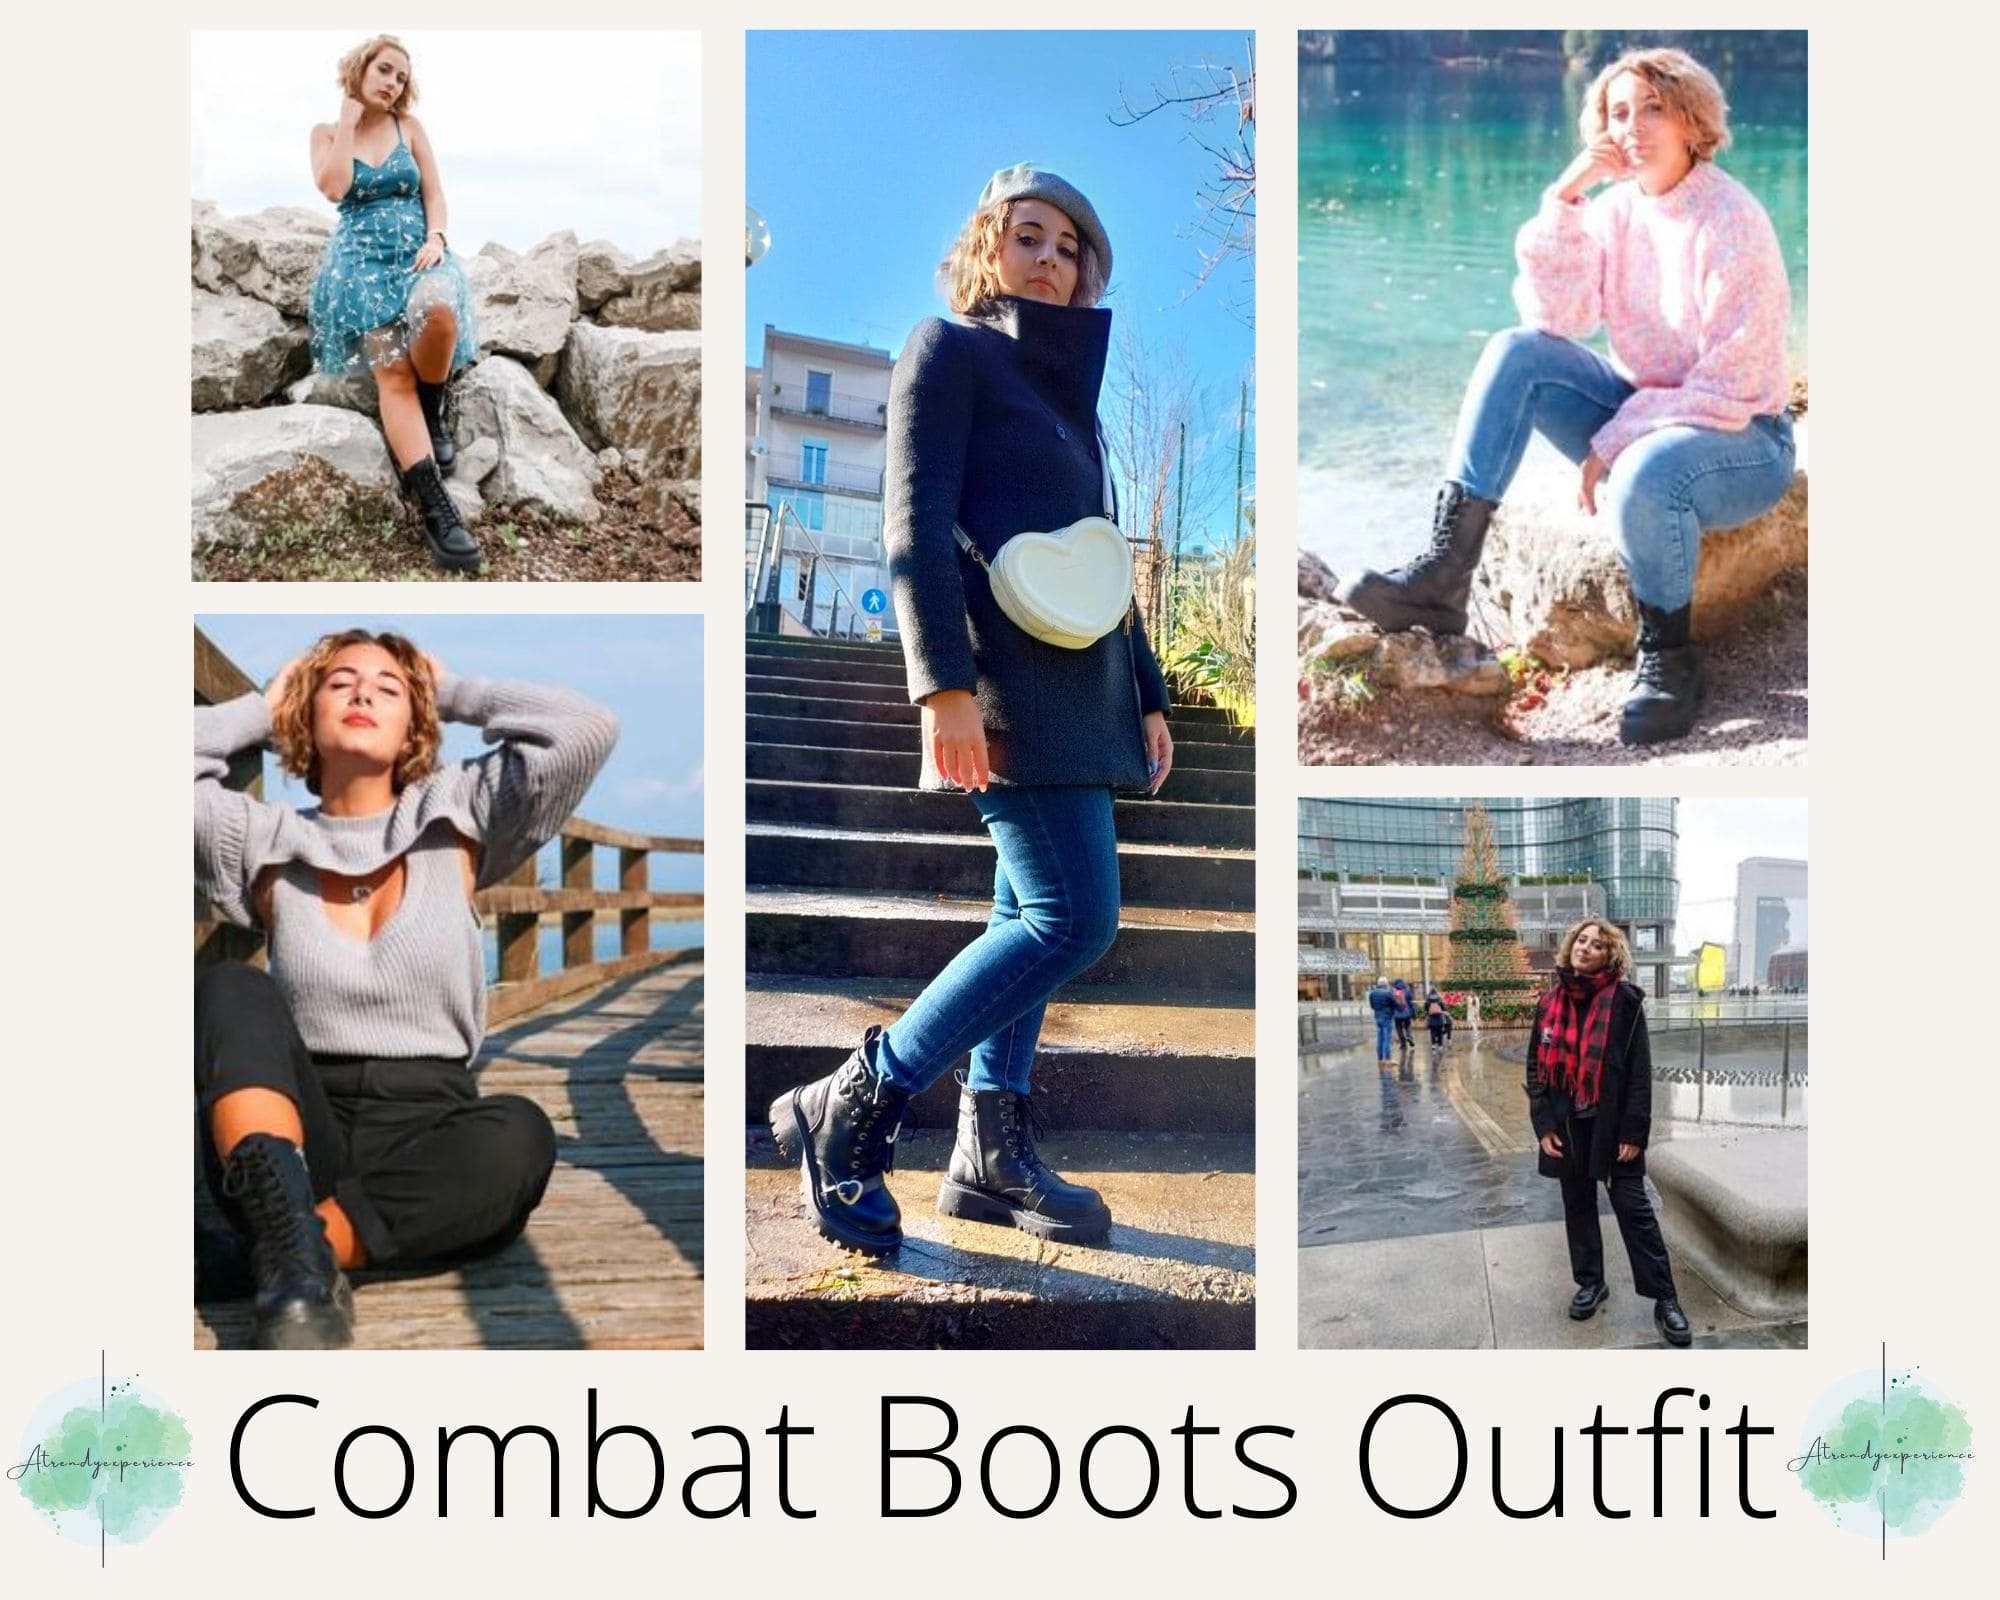 Combat boots outfit i nostri abbinamenti 